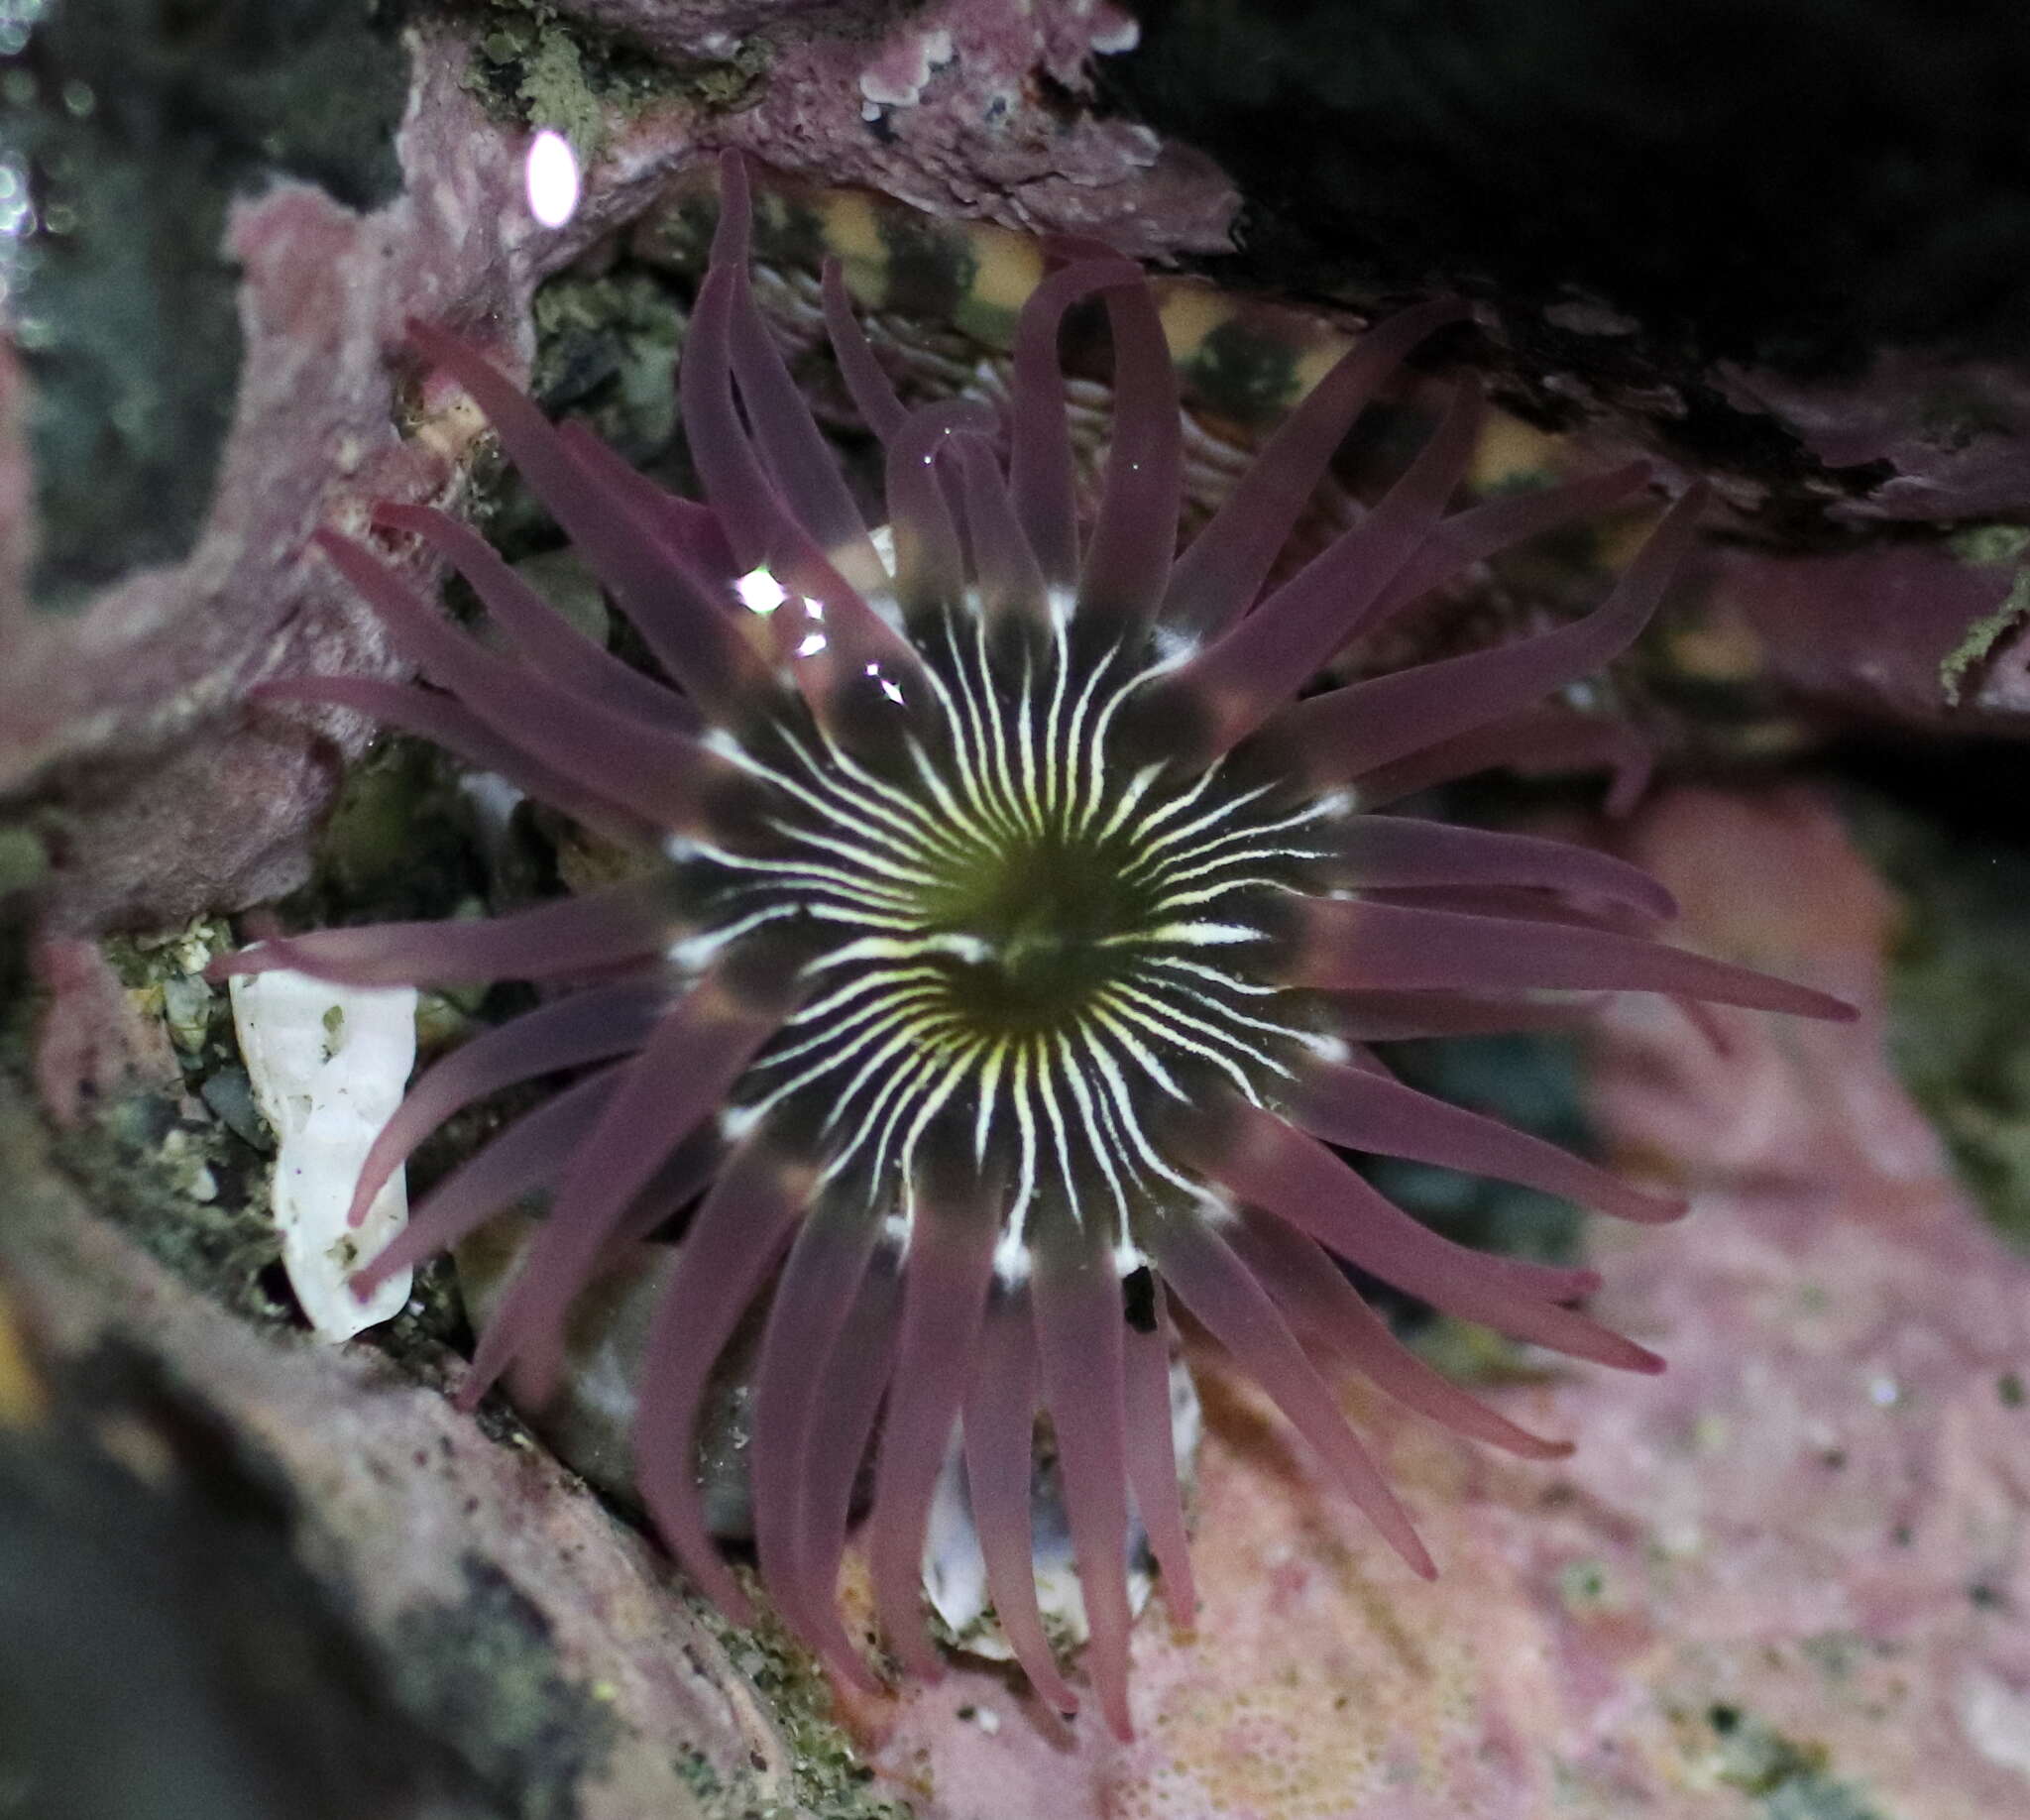 Image of incubating anemone